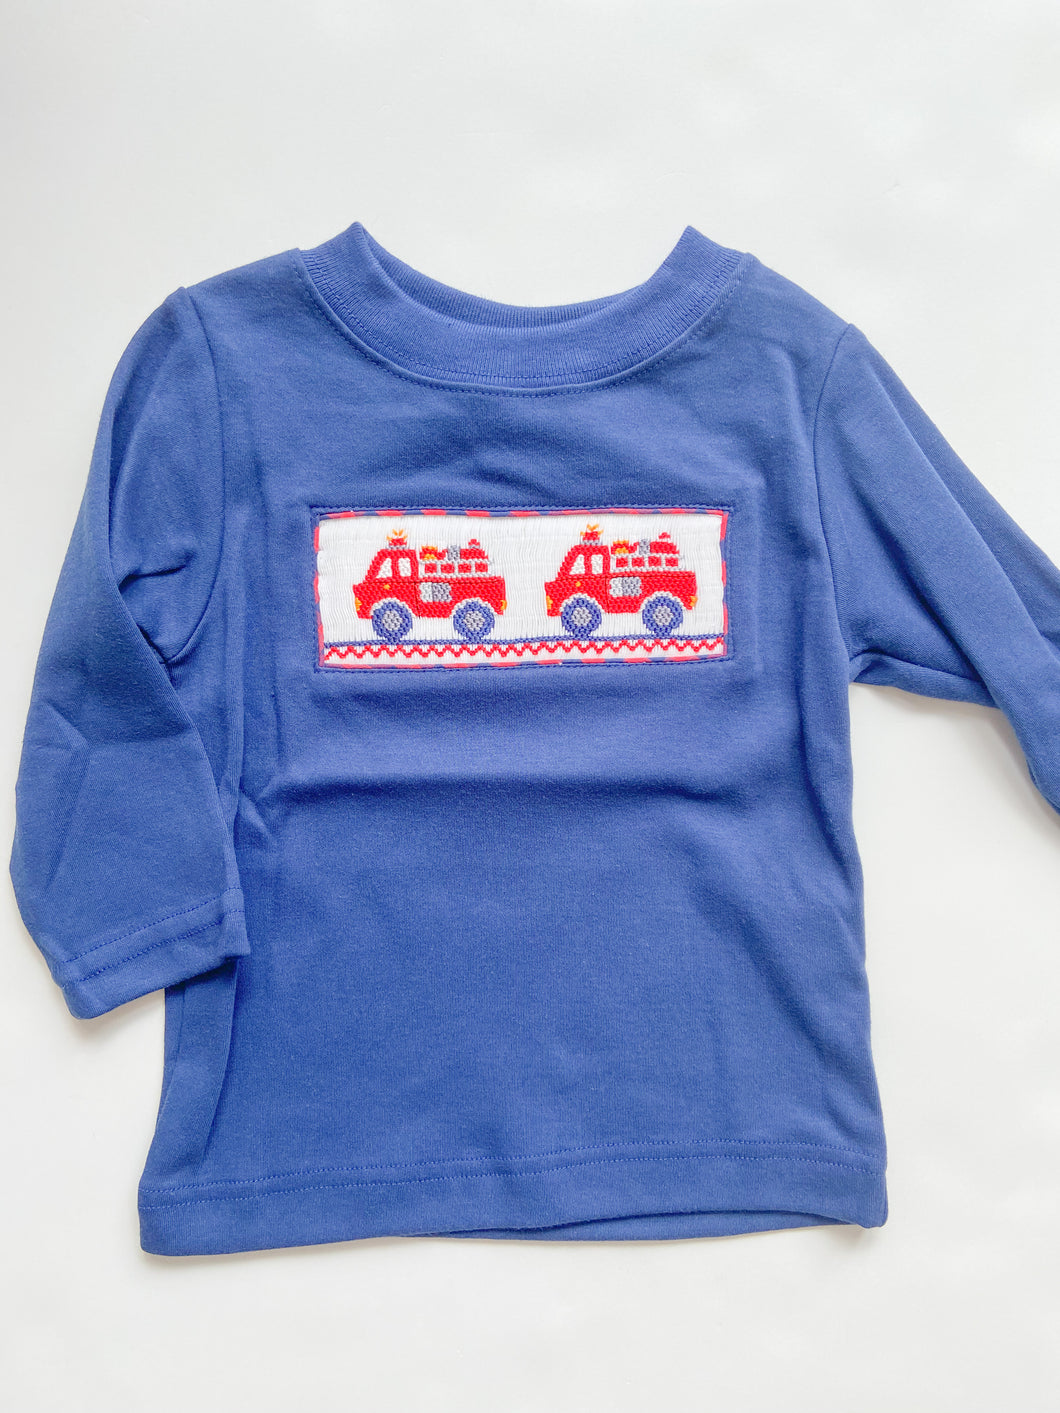 Firetruck Smocked T-Shirt - Toddler Boys